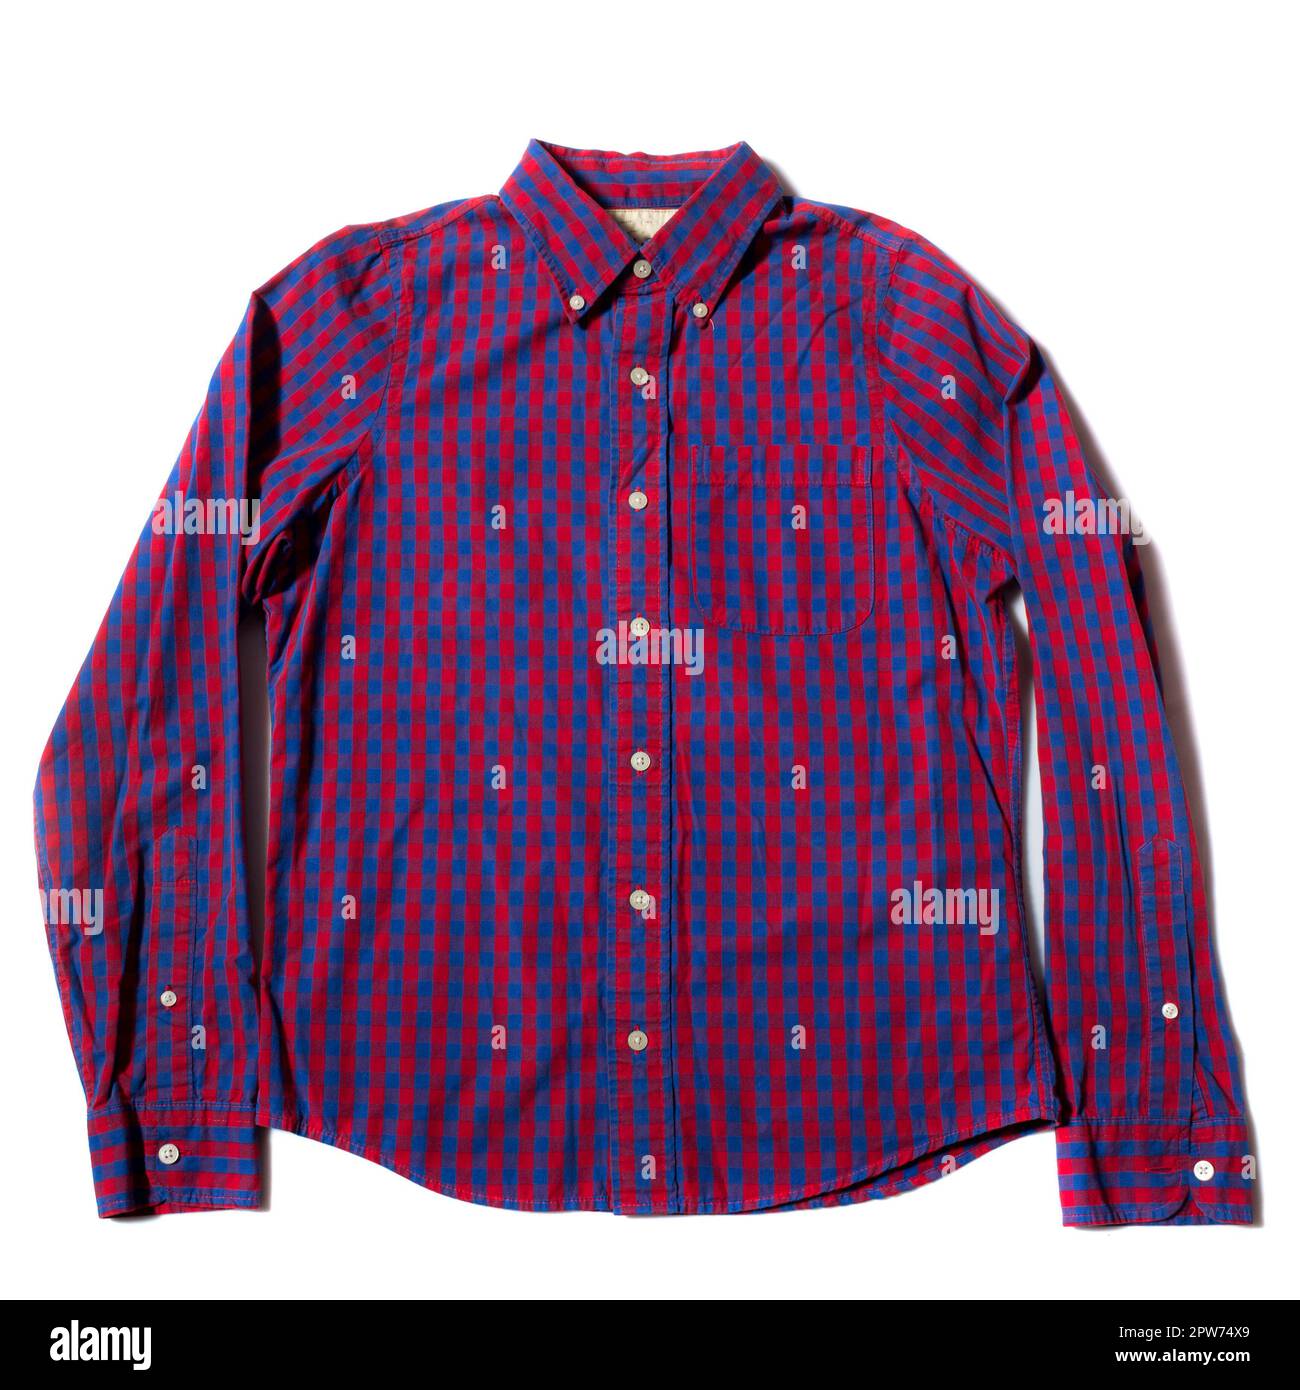 Supreme red blue short sleeve plaid button down shirt